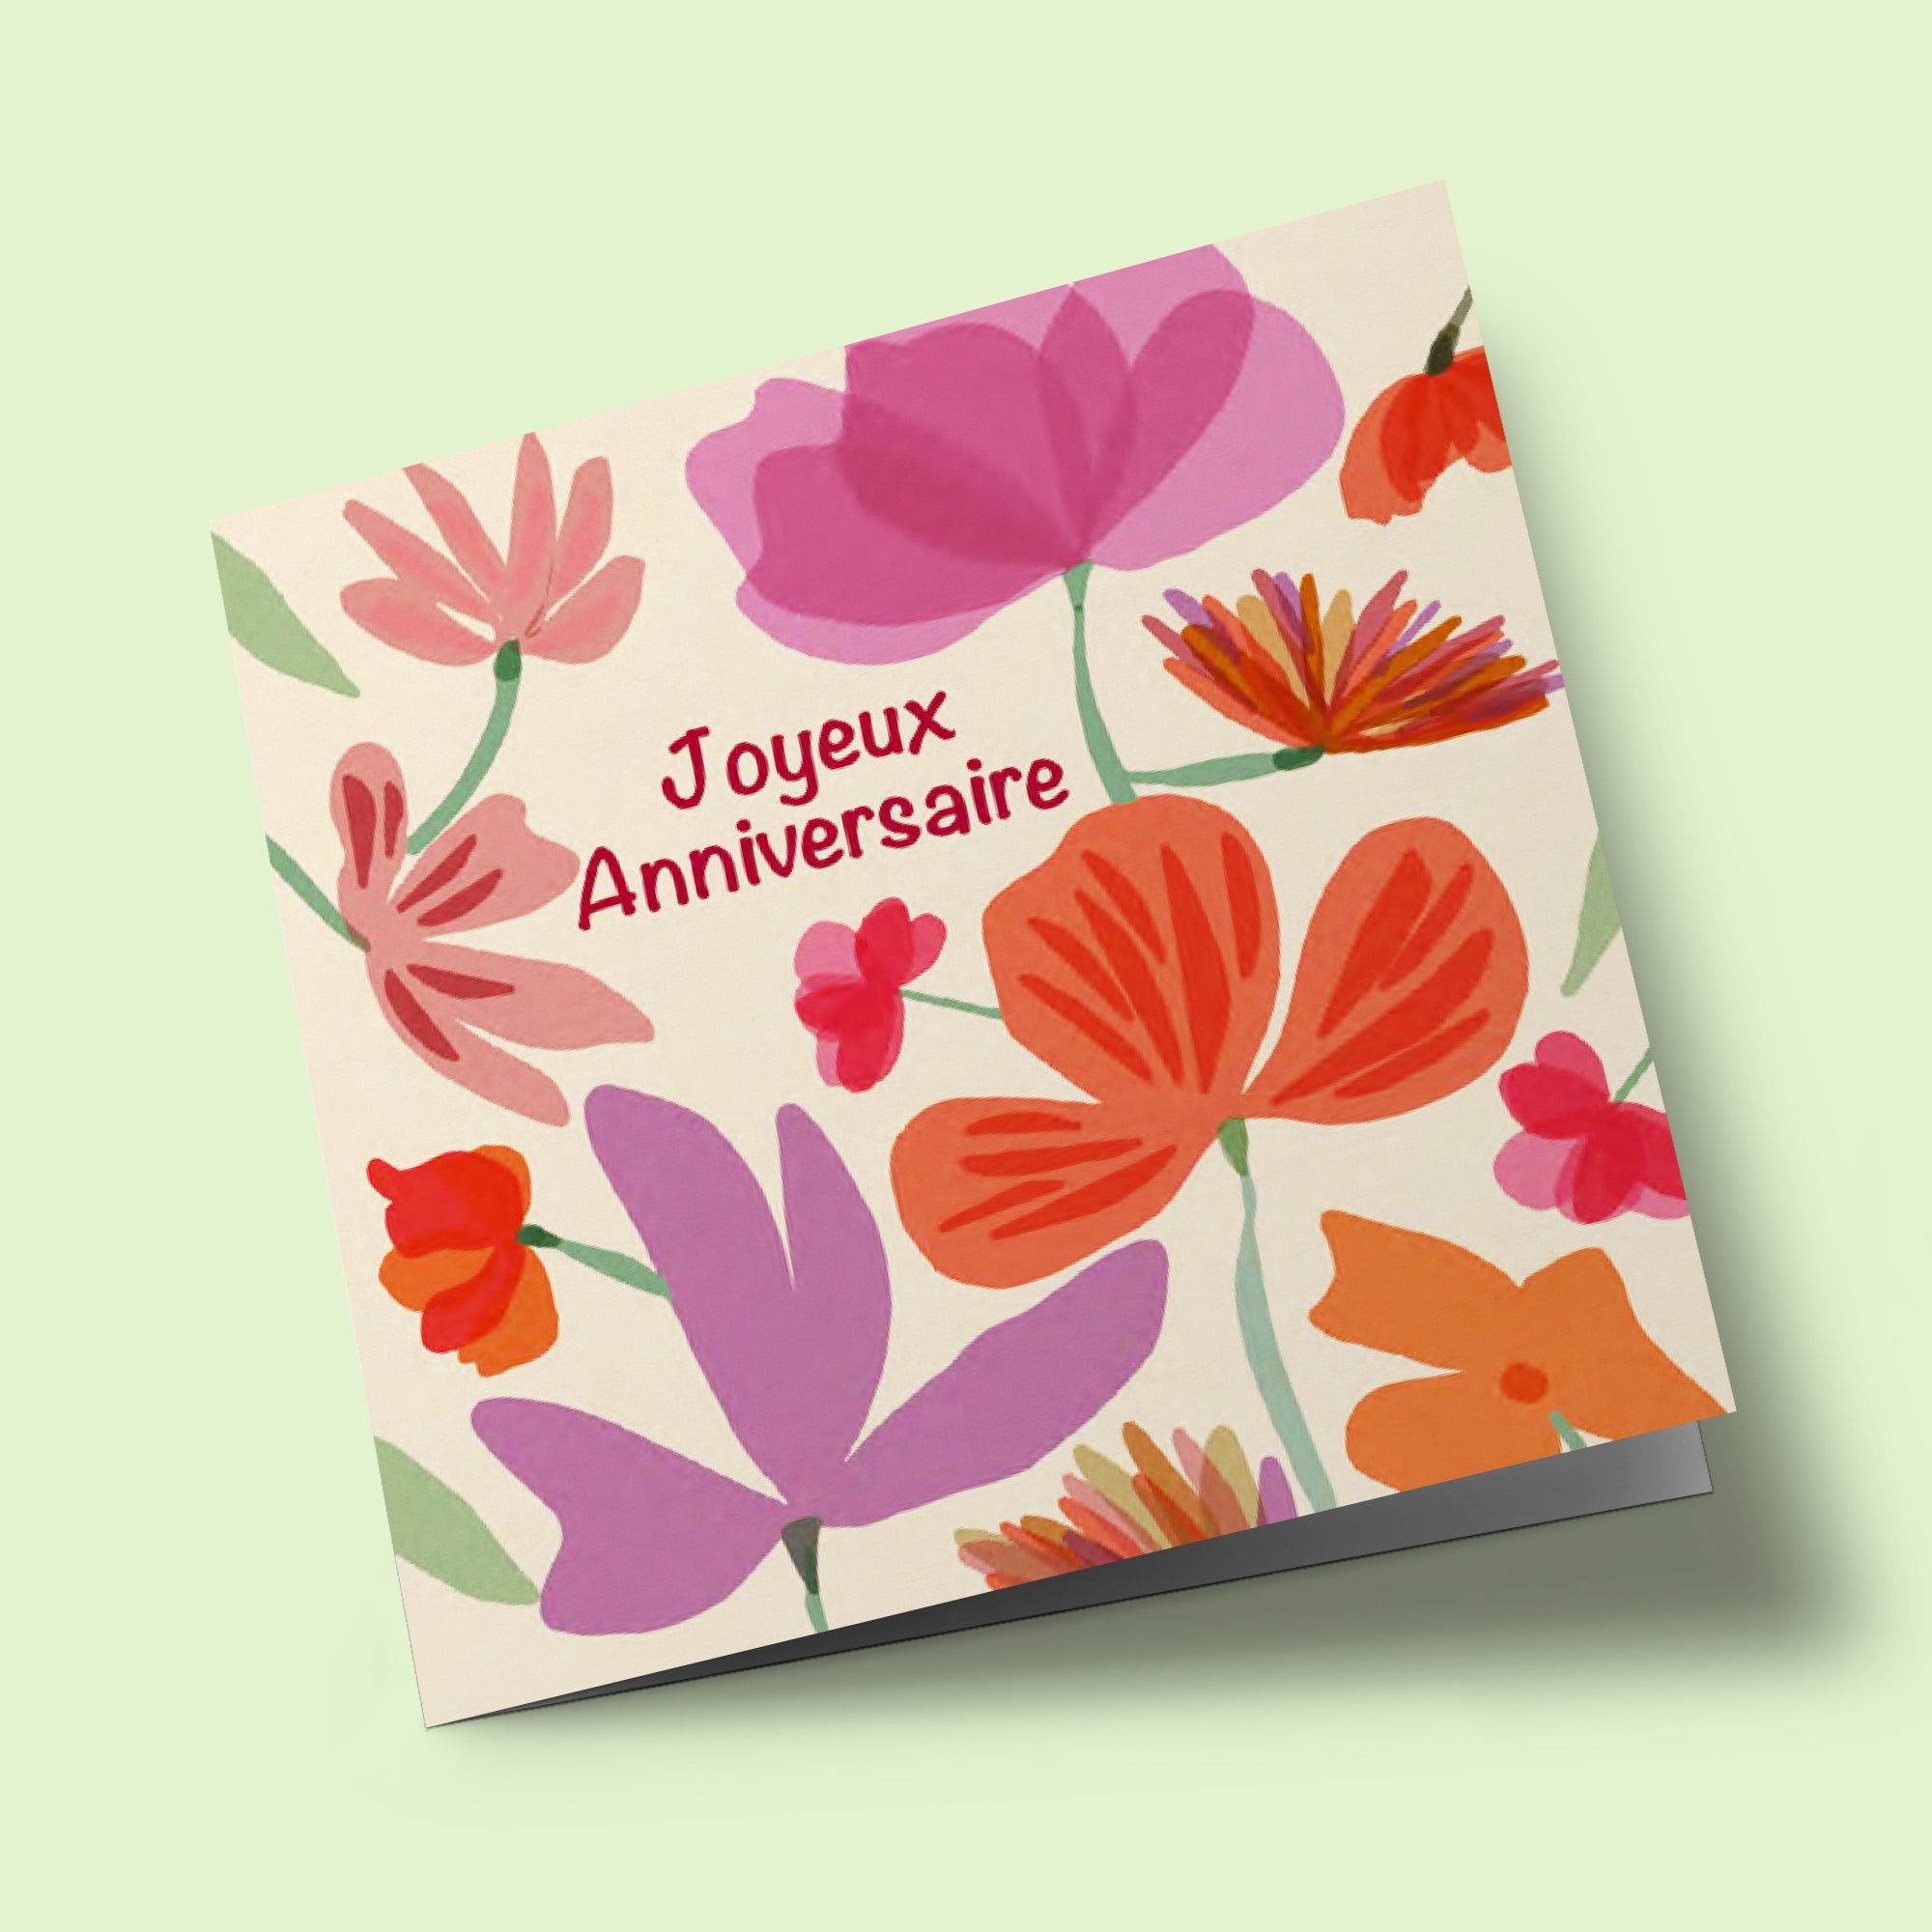 The Little Flowers - Joyeux Anniversaire - Big Pink and Orange Flowers